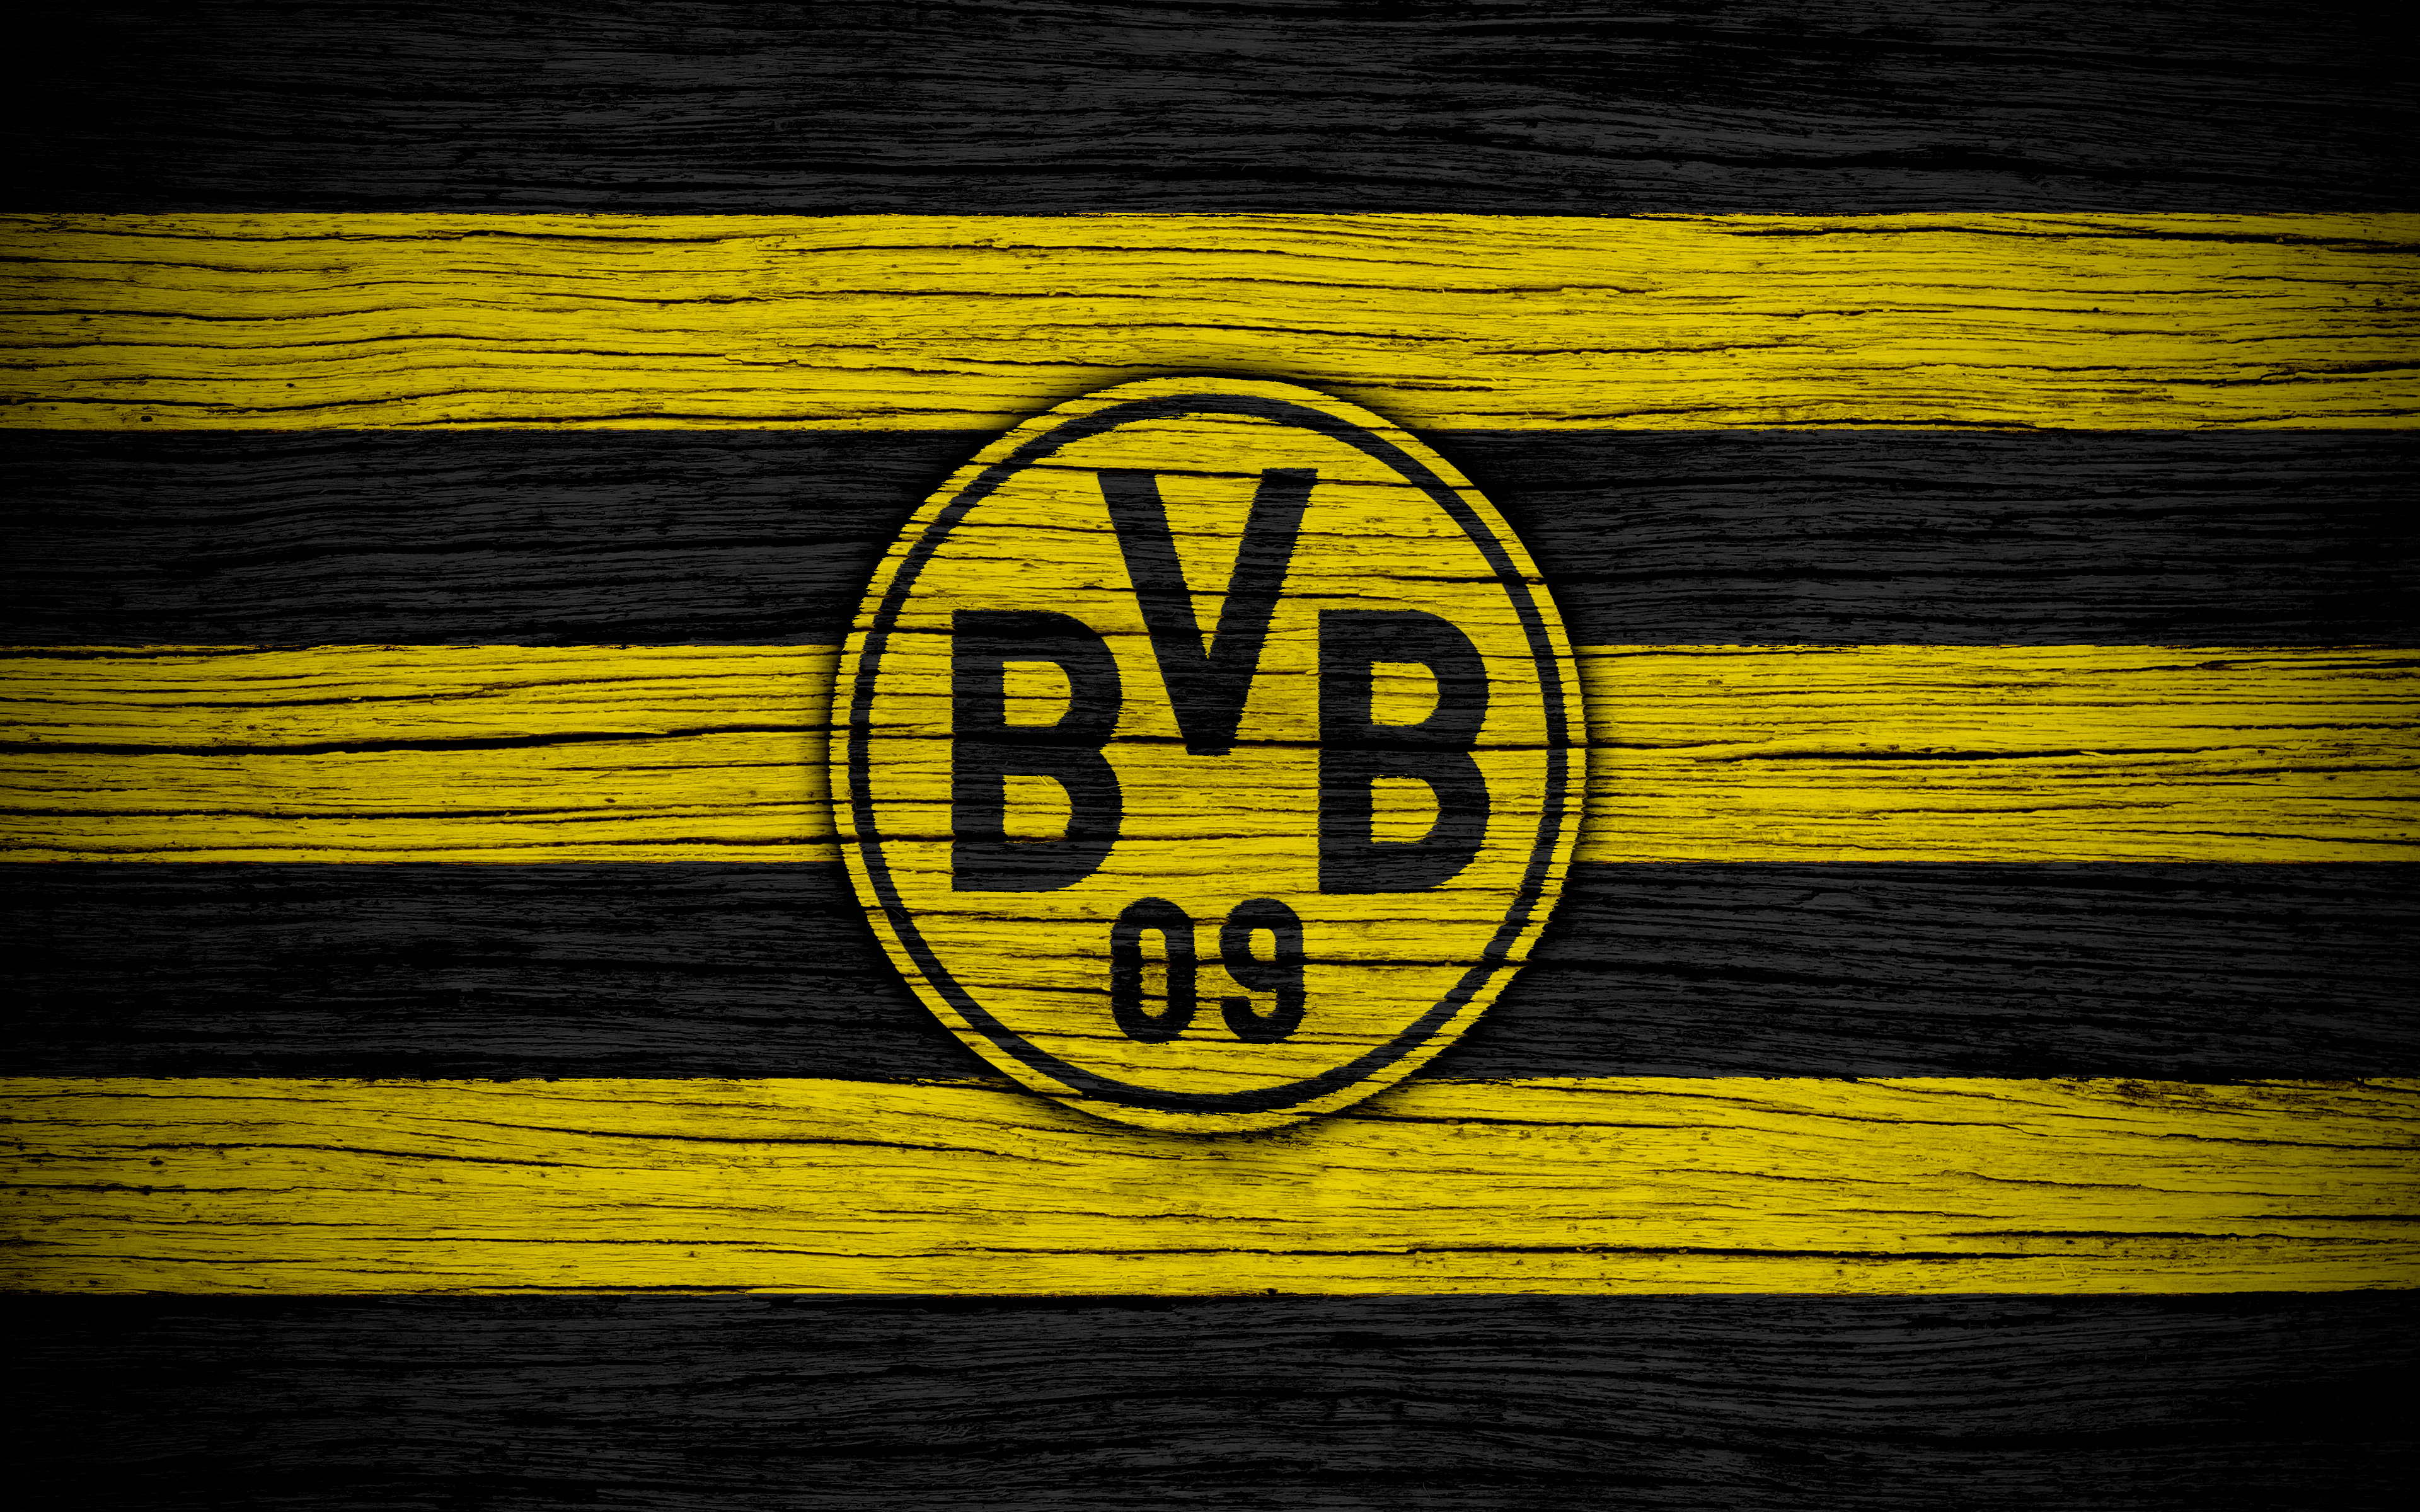 borussia dortmund, bvb, sports, emblem, logo, soccer